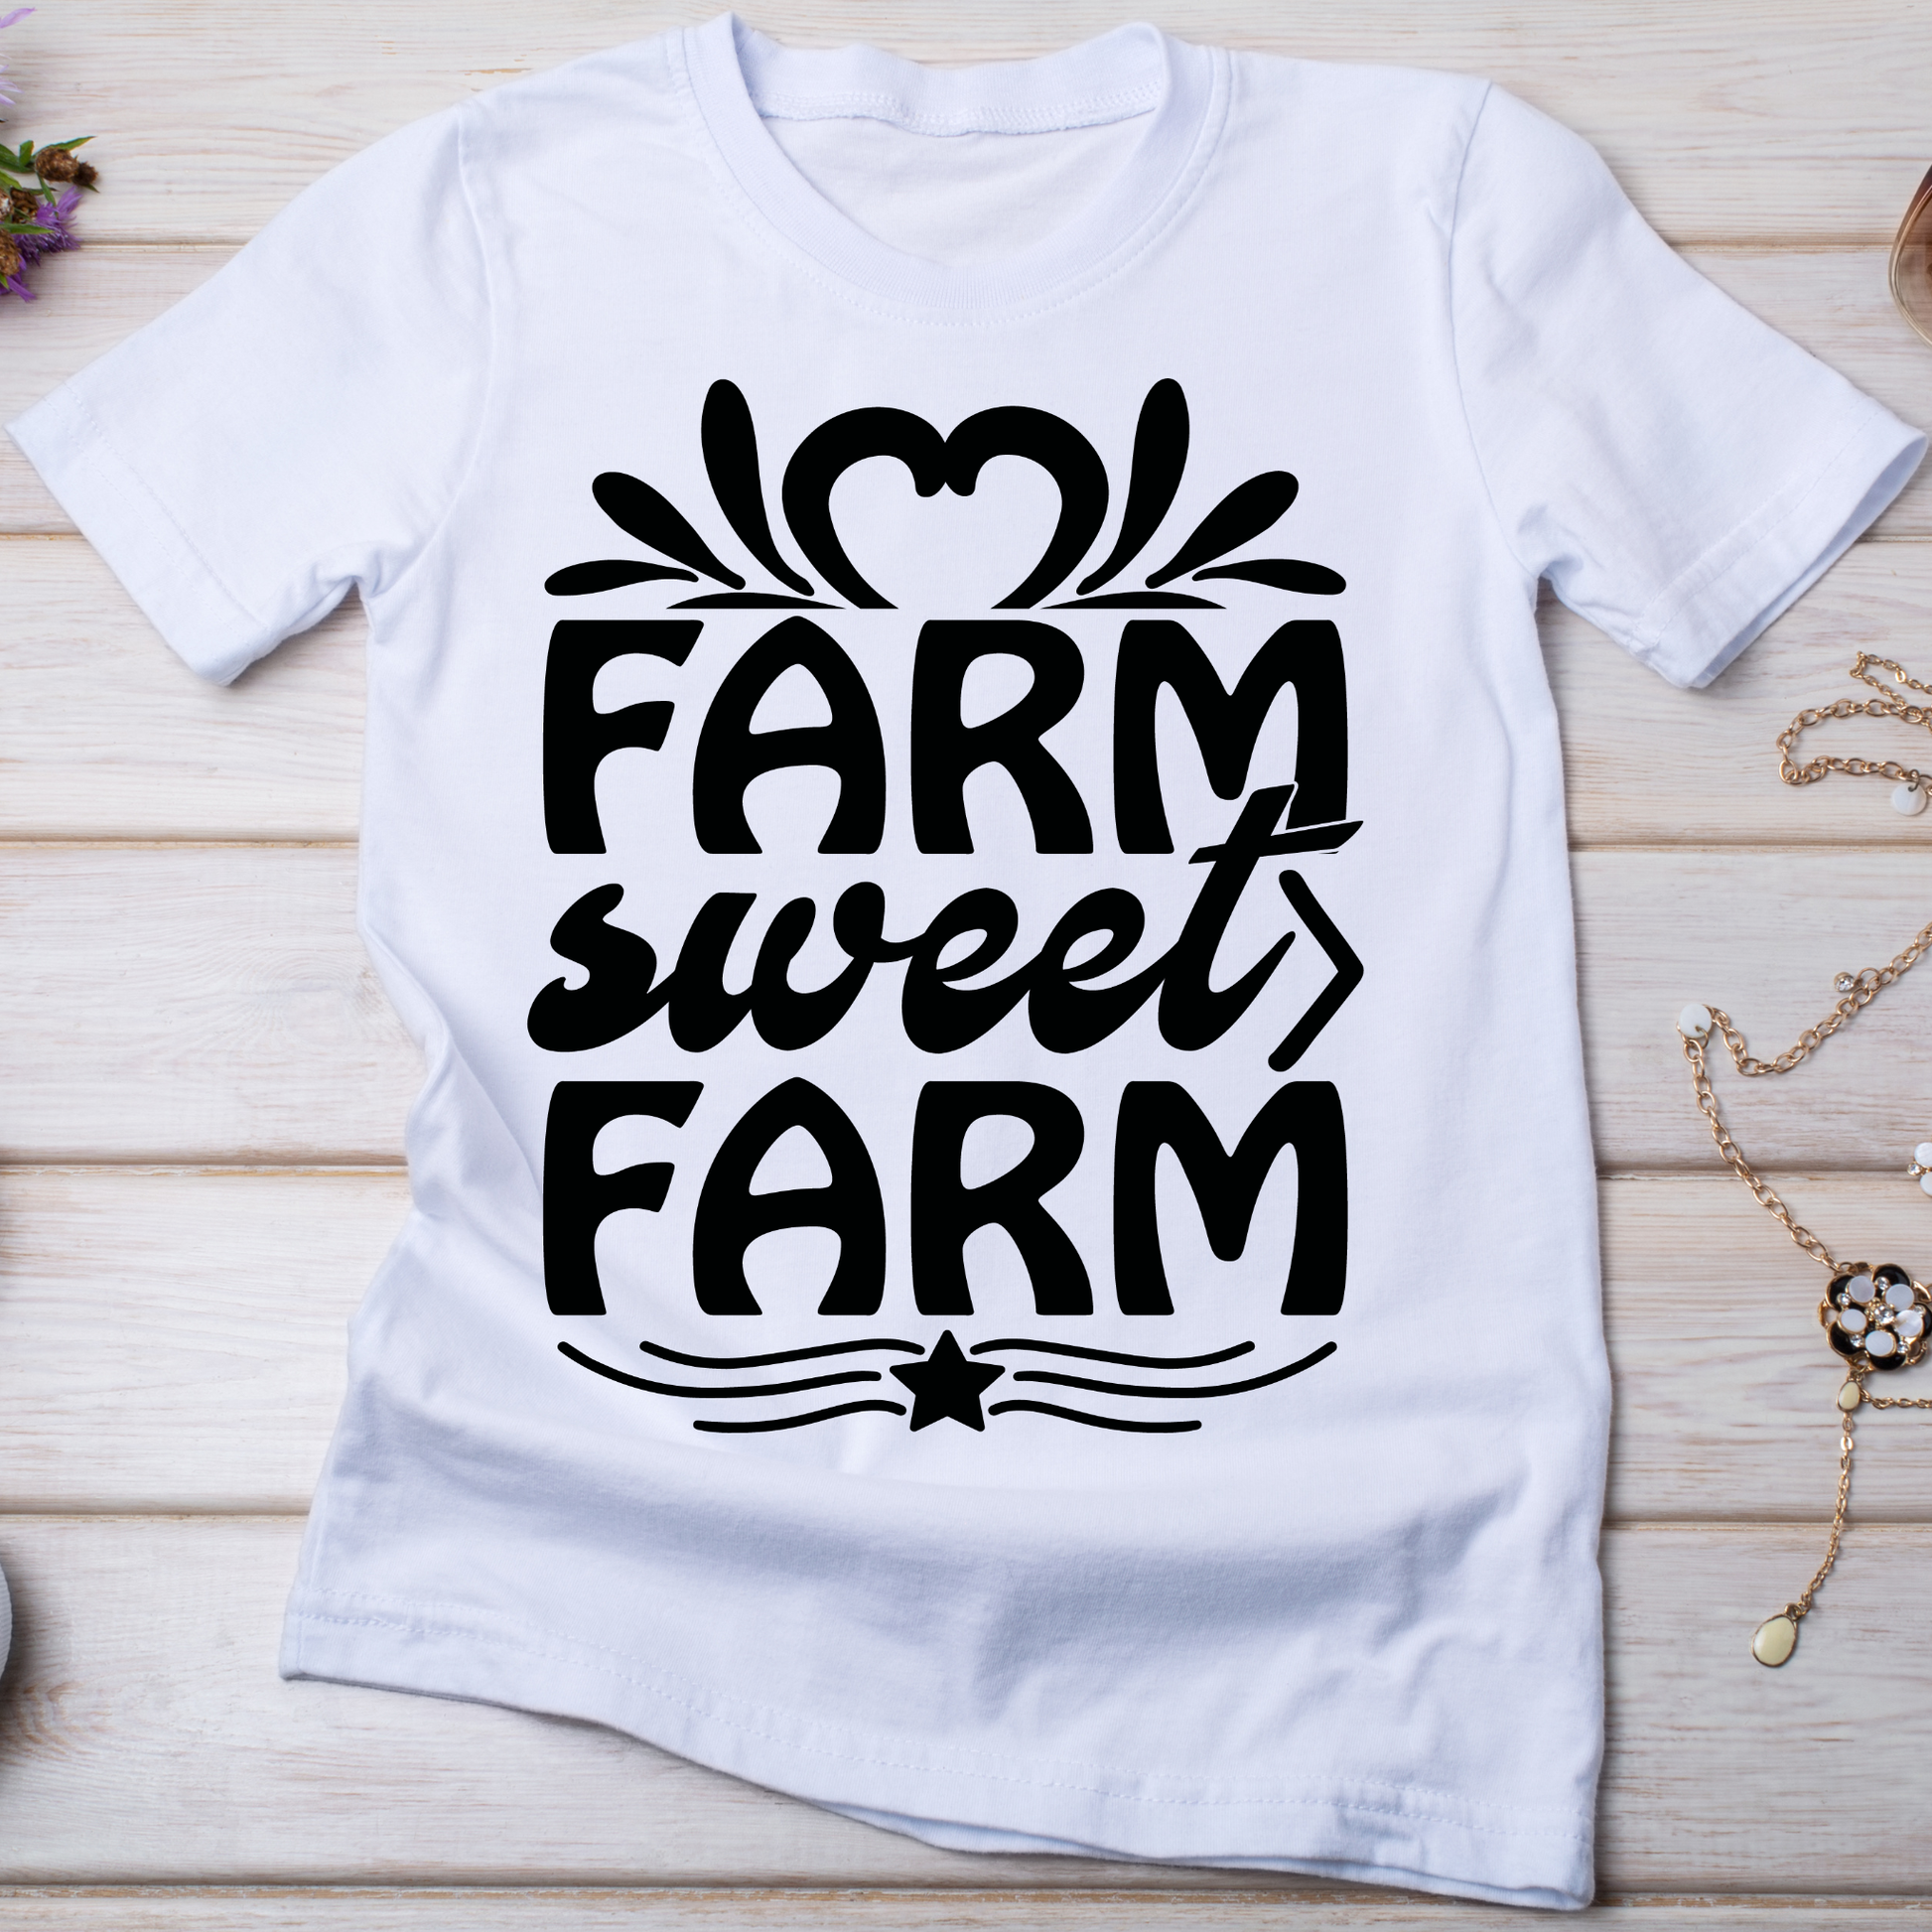 Farm sweet farm Women's farm t-shirt - Premium t-shirt from Lees Krazy Teez - Just $21.95! Shop now at Lees Krazy Teez